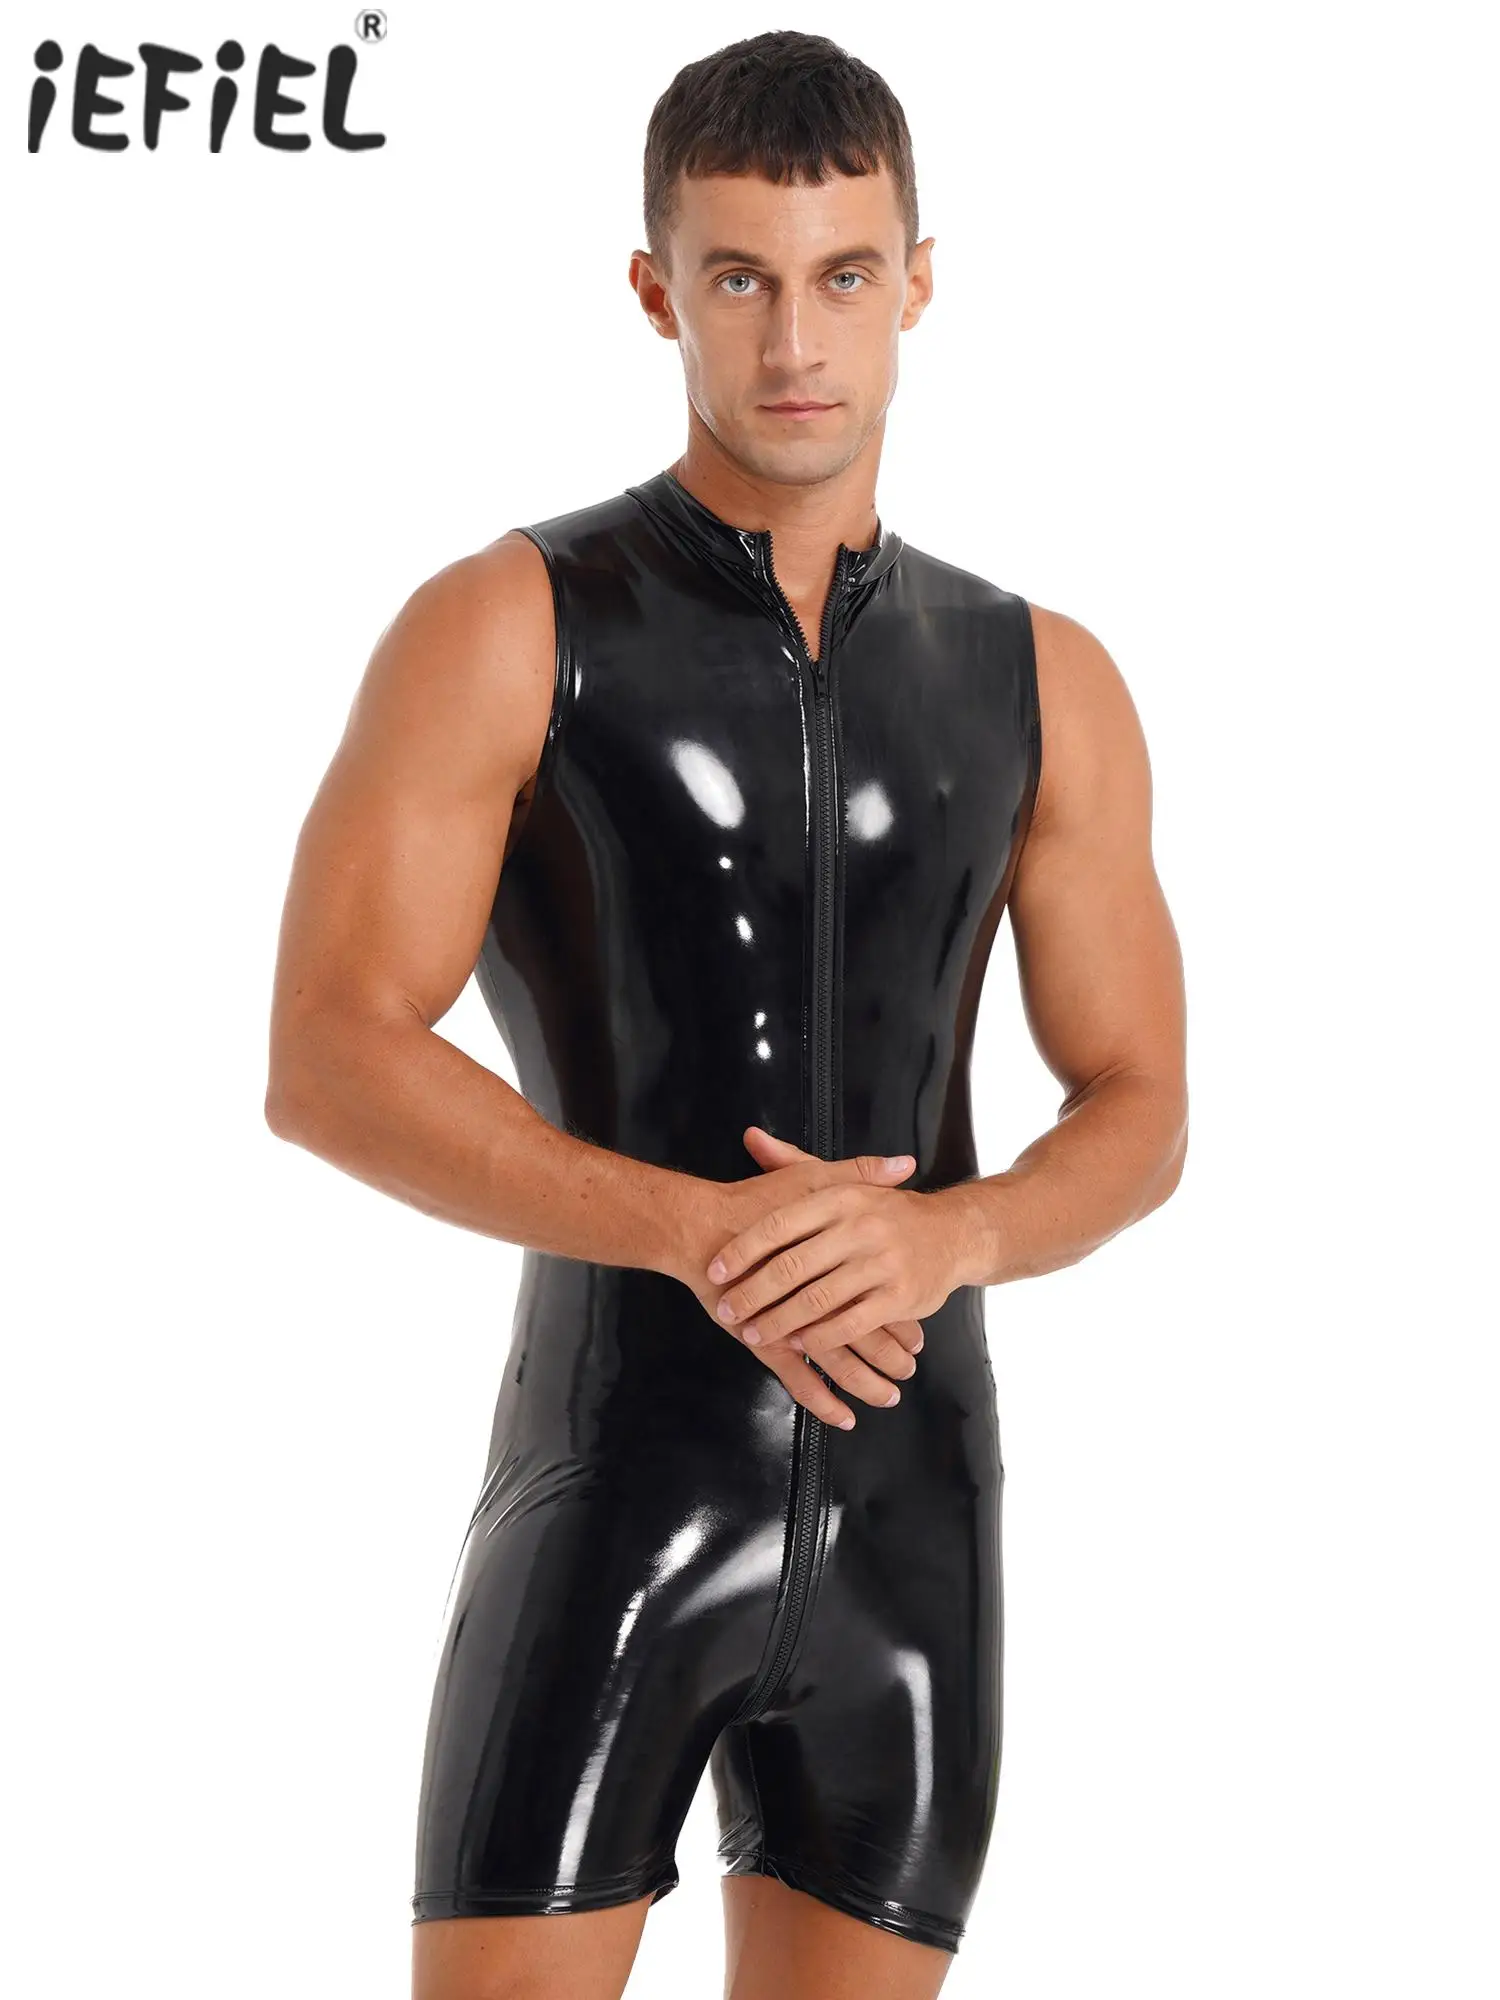 

Black Men Wet Look Patent Leather Glossy Bodysuit Sleeveless Zipper Crotch Lingerie Club Pole Dancing Costume Jumpsuits Clubwear